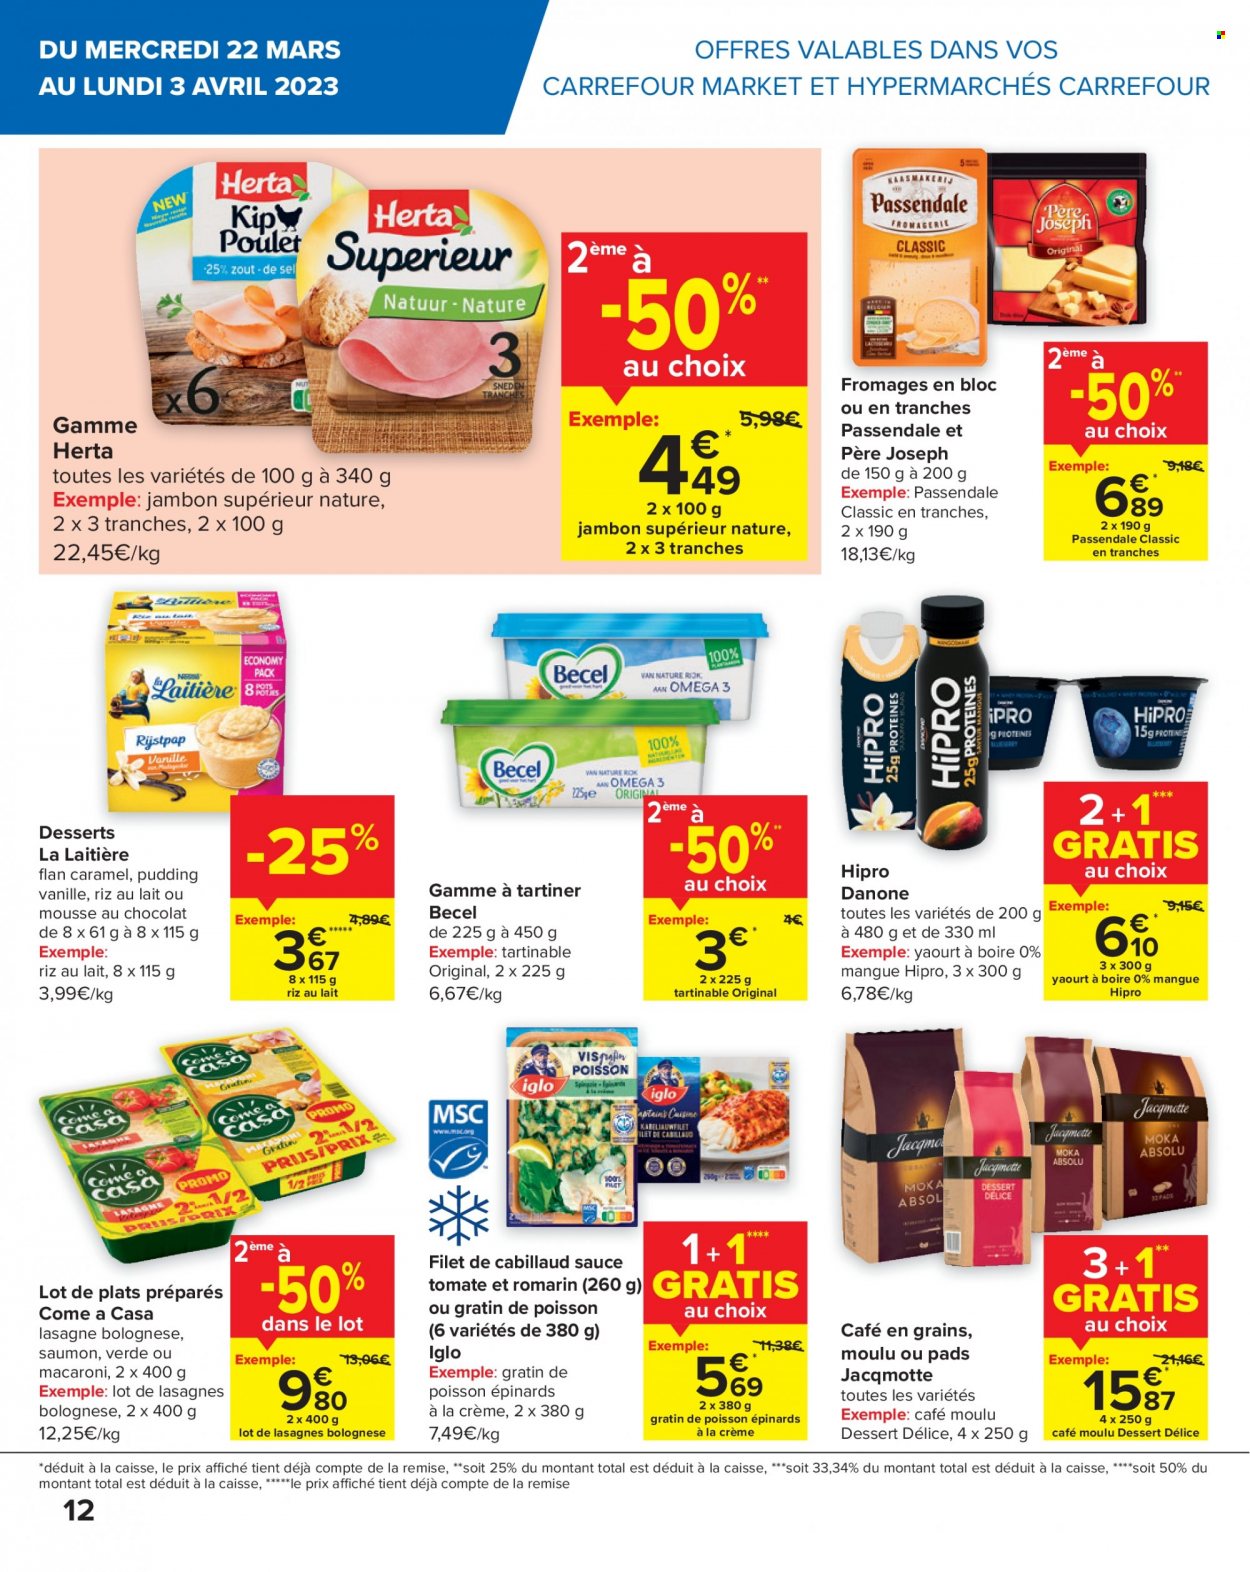 thumbnail - Carrefour-aanbieding - 22/03/2023 - 03/04/2023 -  producten in de aanbieding - lasagne, Danone, crème, Iglo, macaroni. Pagina 12.